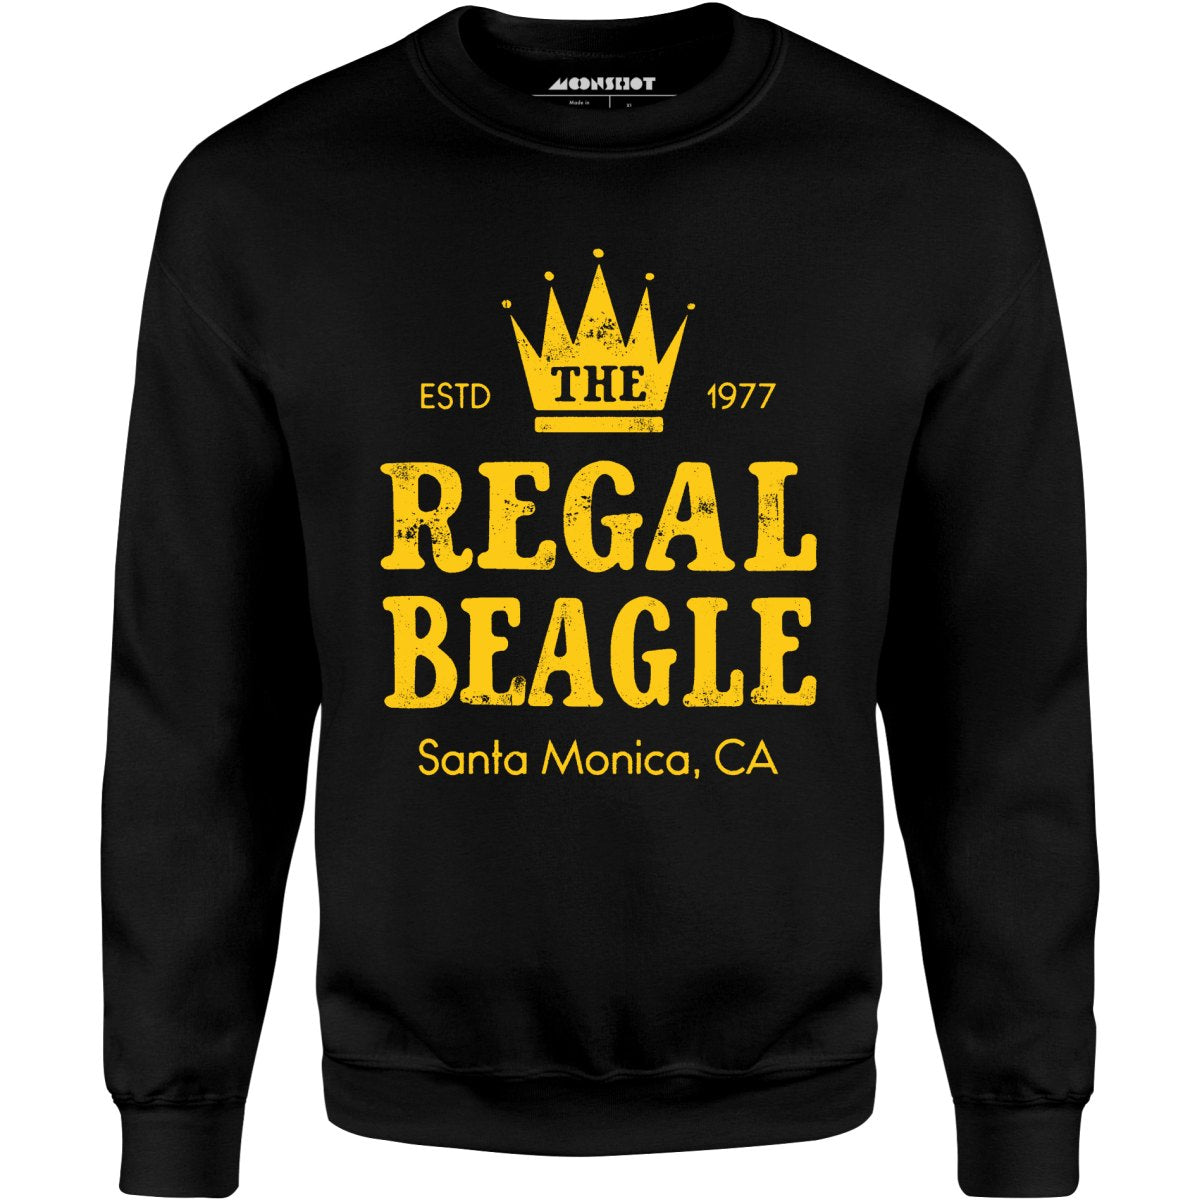 The Regal Beagle - Santa Monica, CA - Unisex Sweatshirt